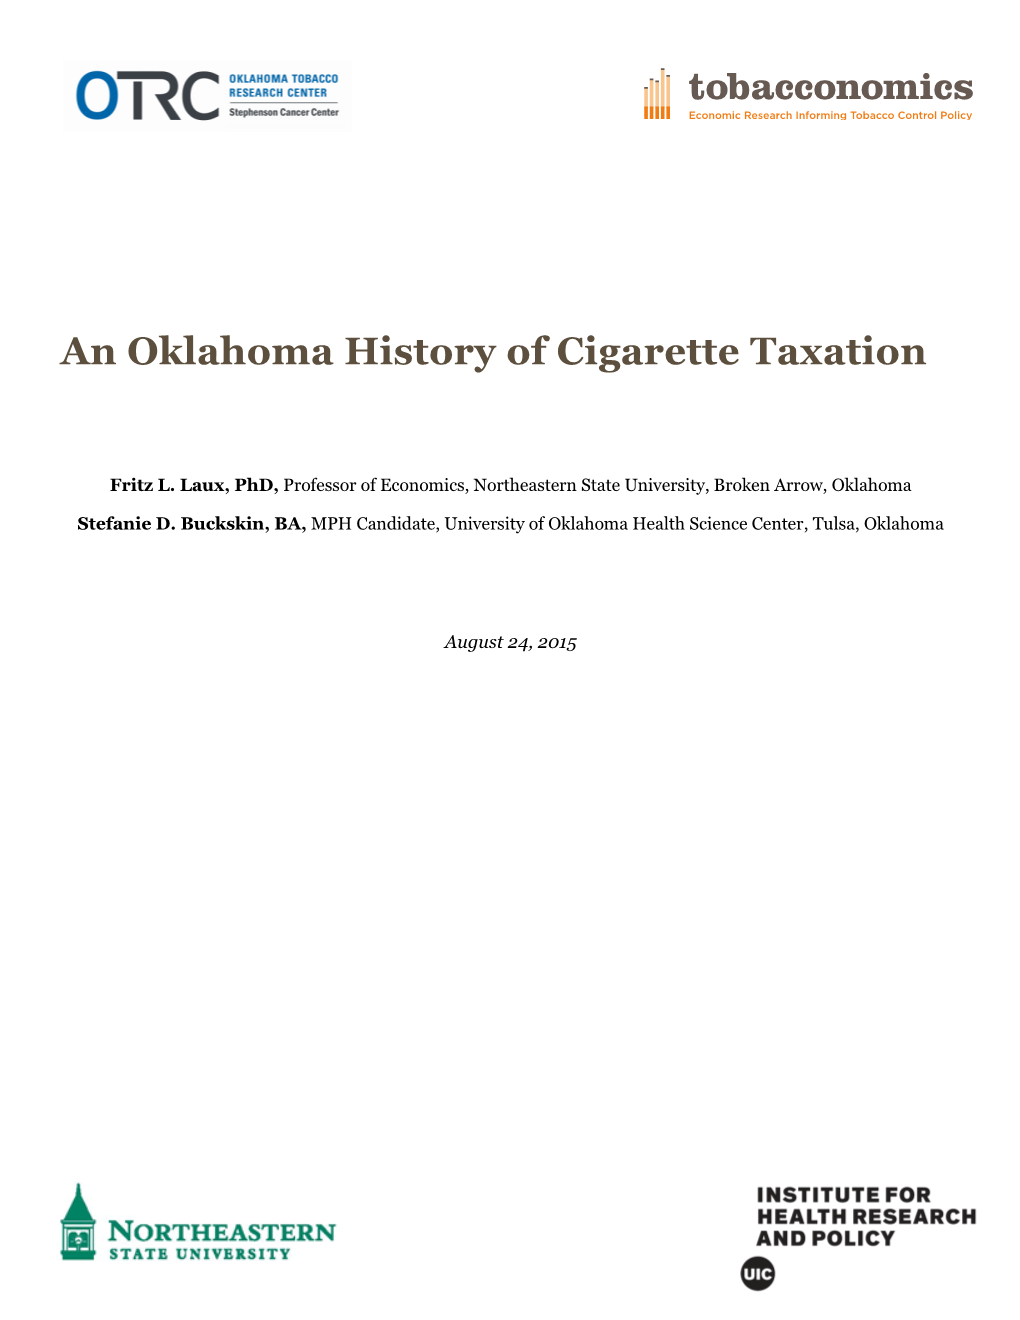 An Oklahoma History of Cigarette Taxation